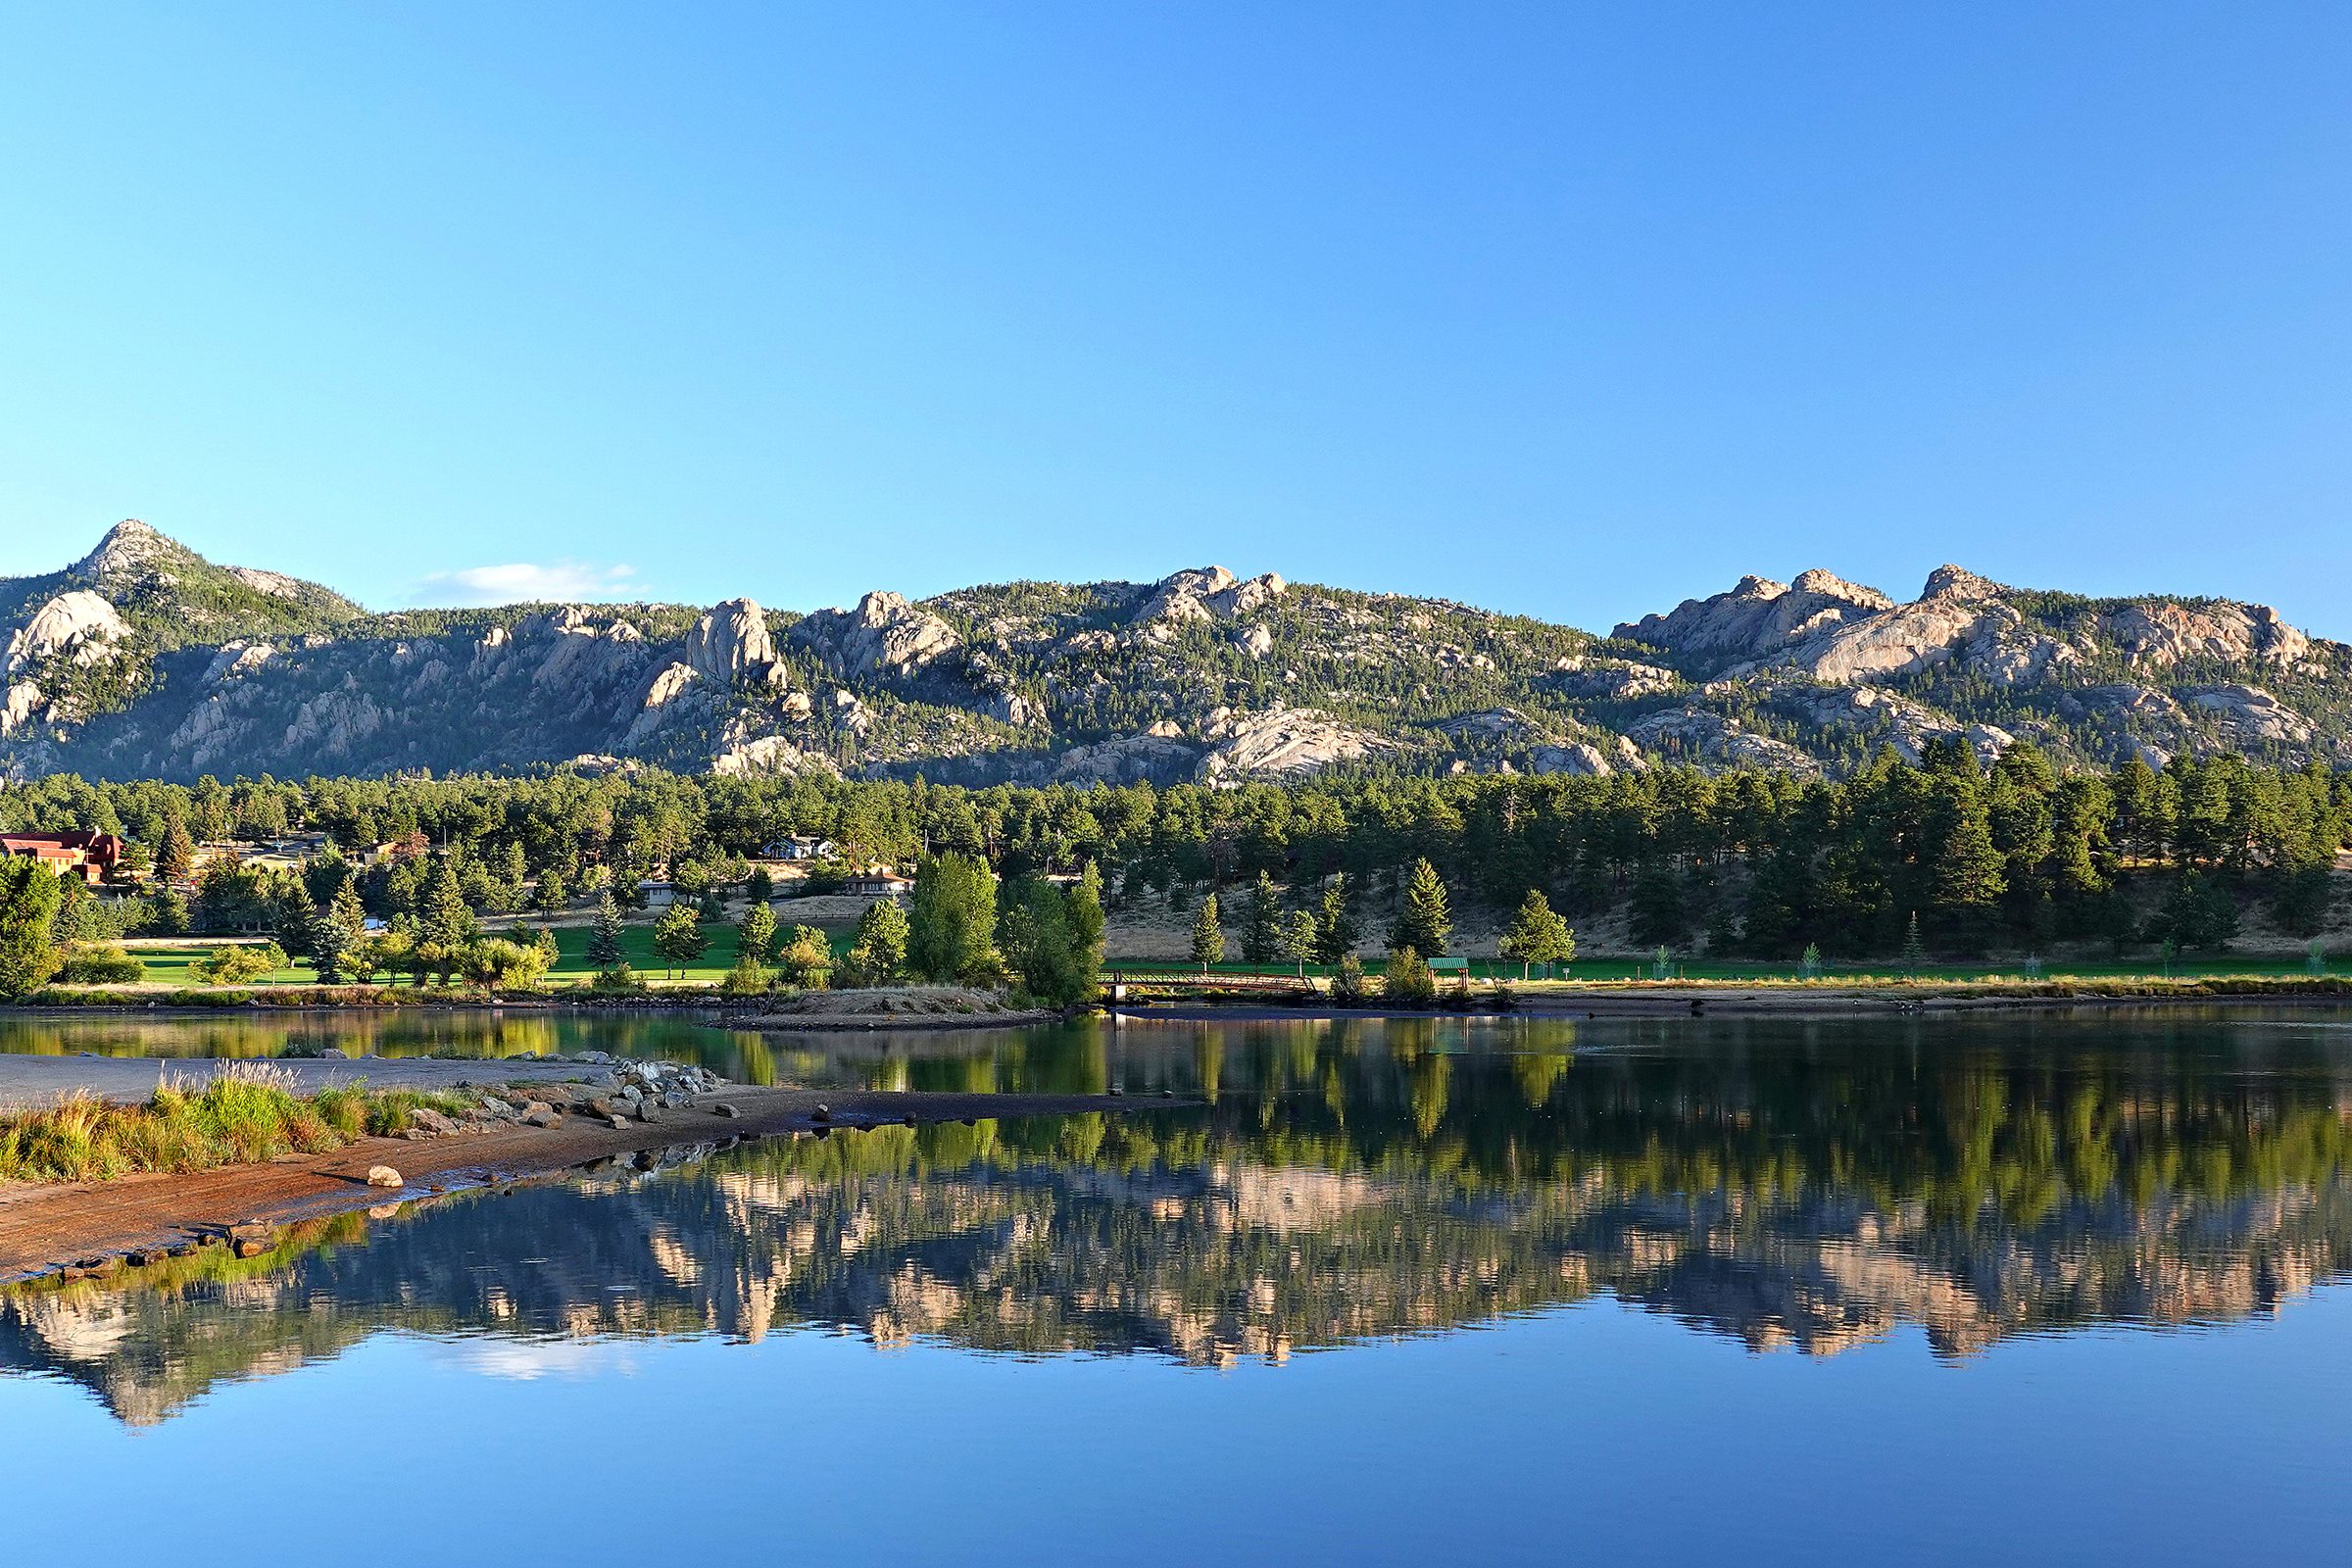 Estes Park, Colorado the mountain is reflected in the lake